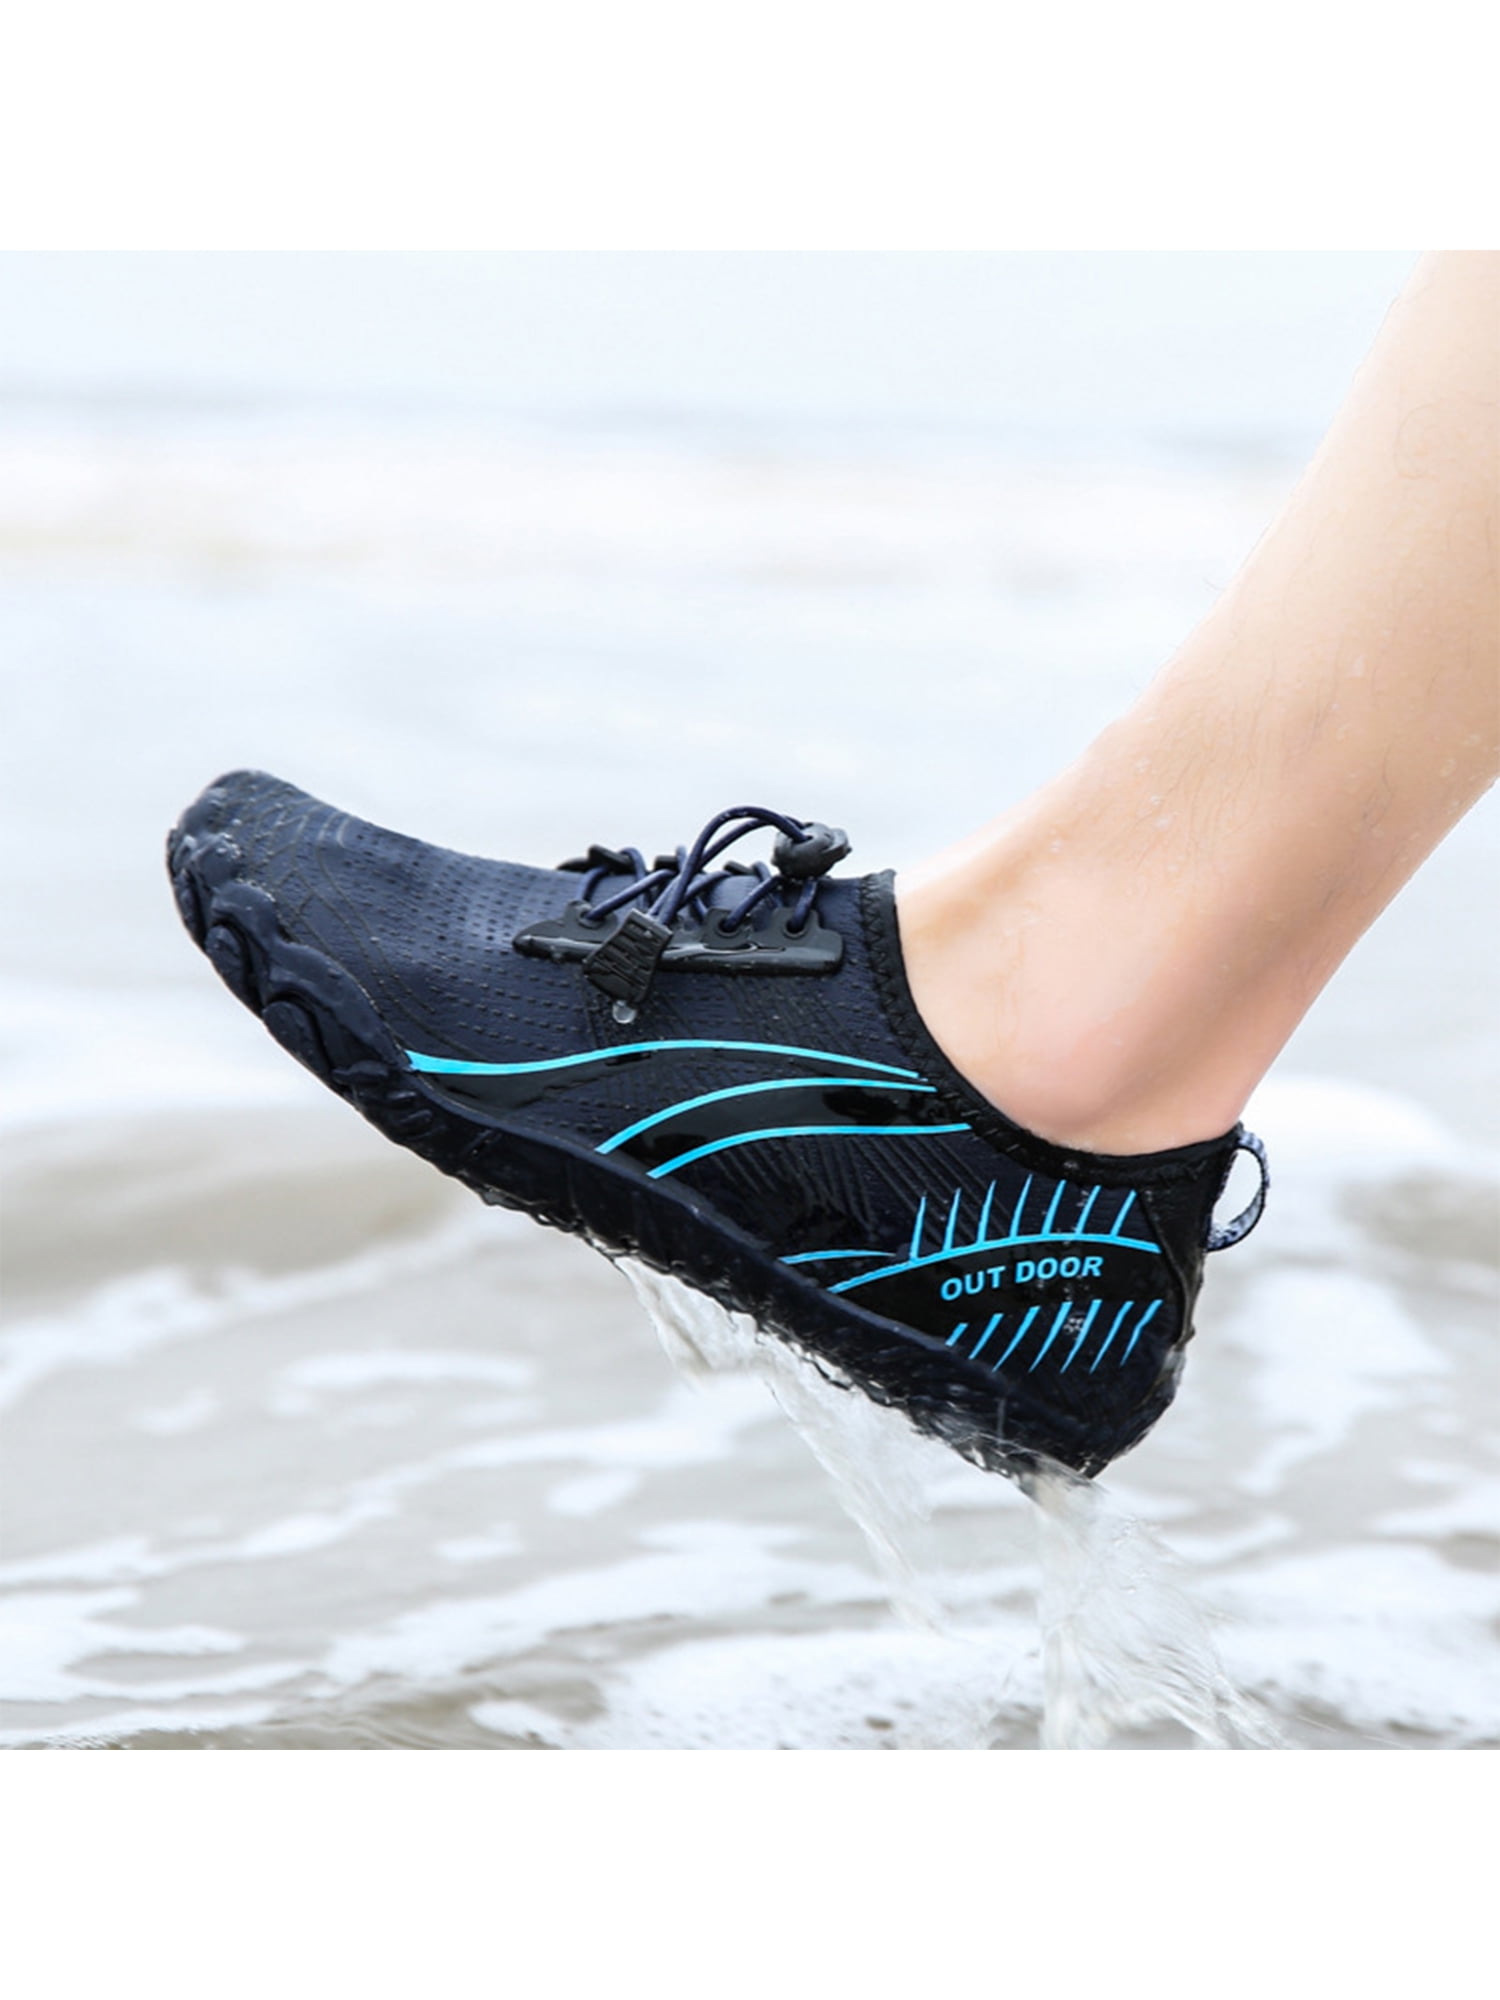 Water Shoes Men Skin Socks Aqua Surf  Beach Swim Pool Sports Barefoot Large Size 